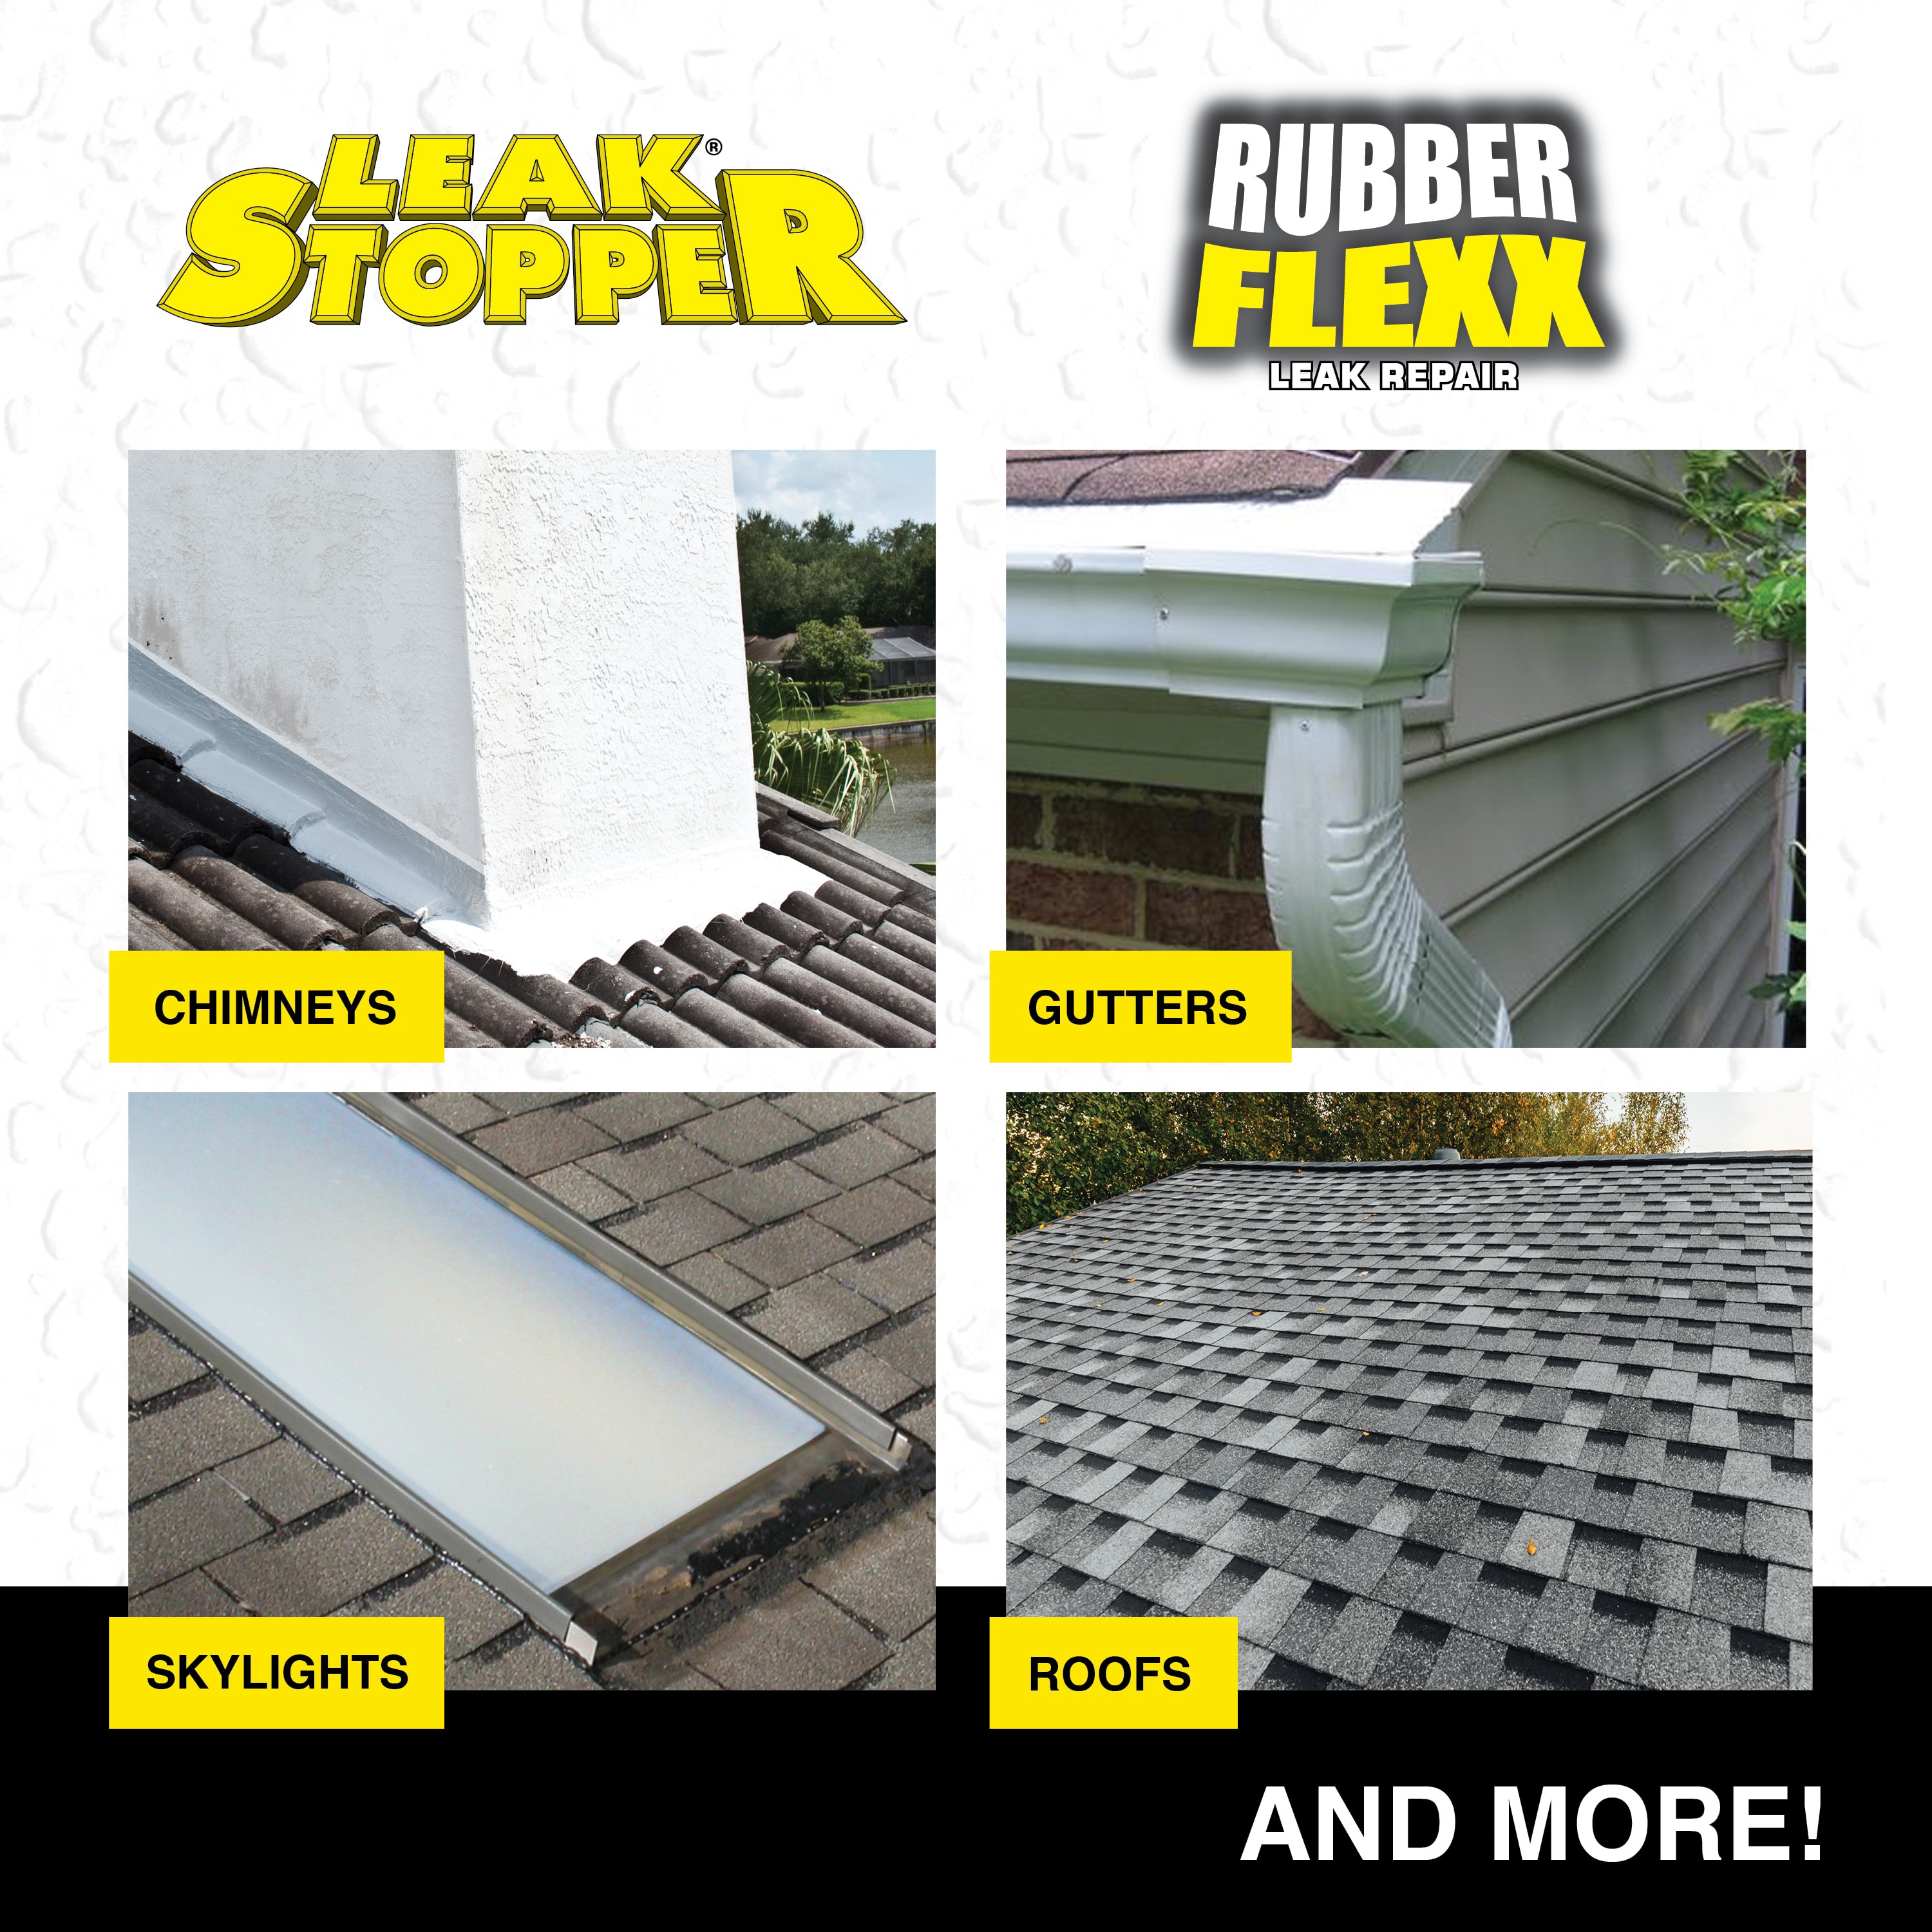  Leak Stopper Rubber Flexx – Waterproof Repair & Sealant Spray -  Point & Spray to Seal Cracks, Holes, Leaks, Corrosion & More